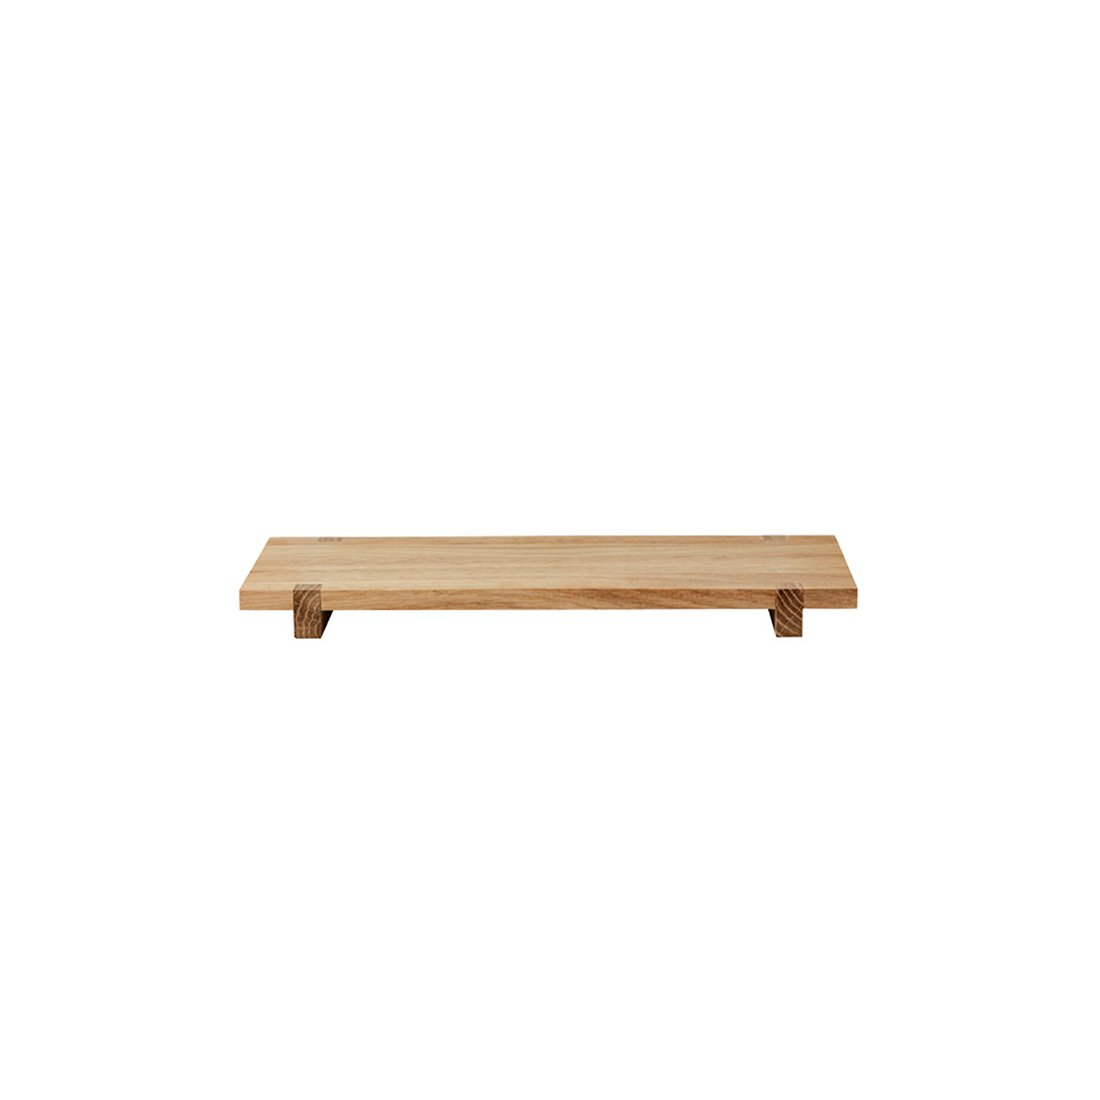 kristina dam studio japanese wood board small shop buy online